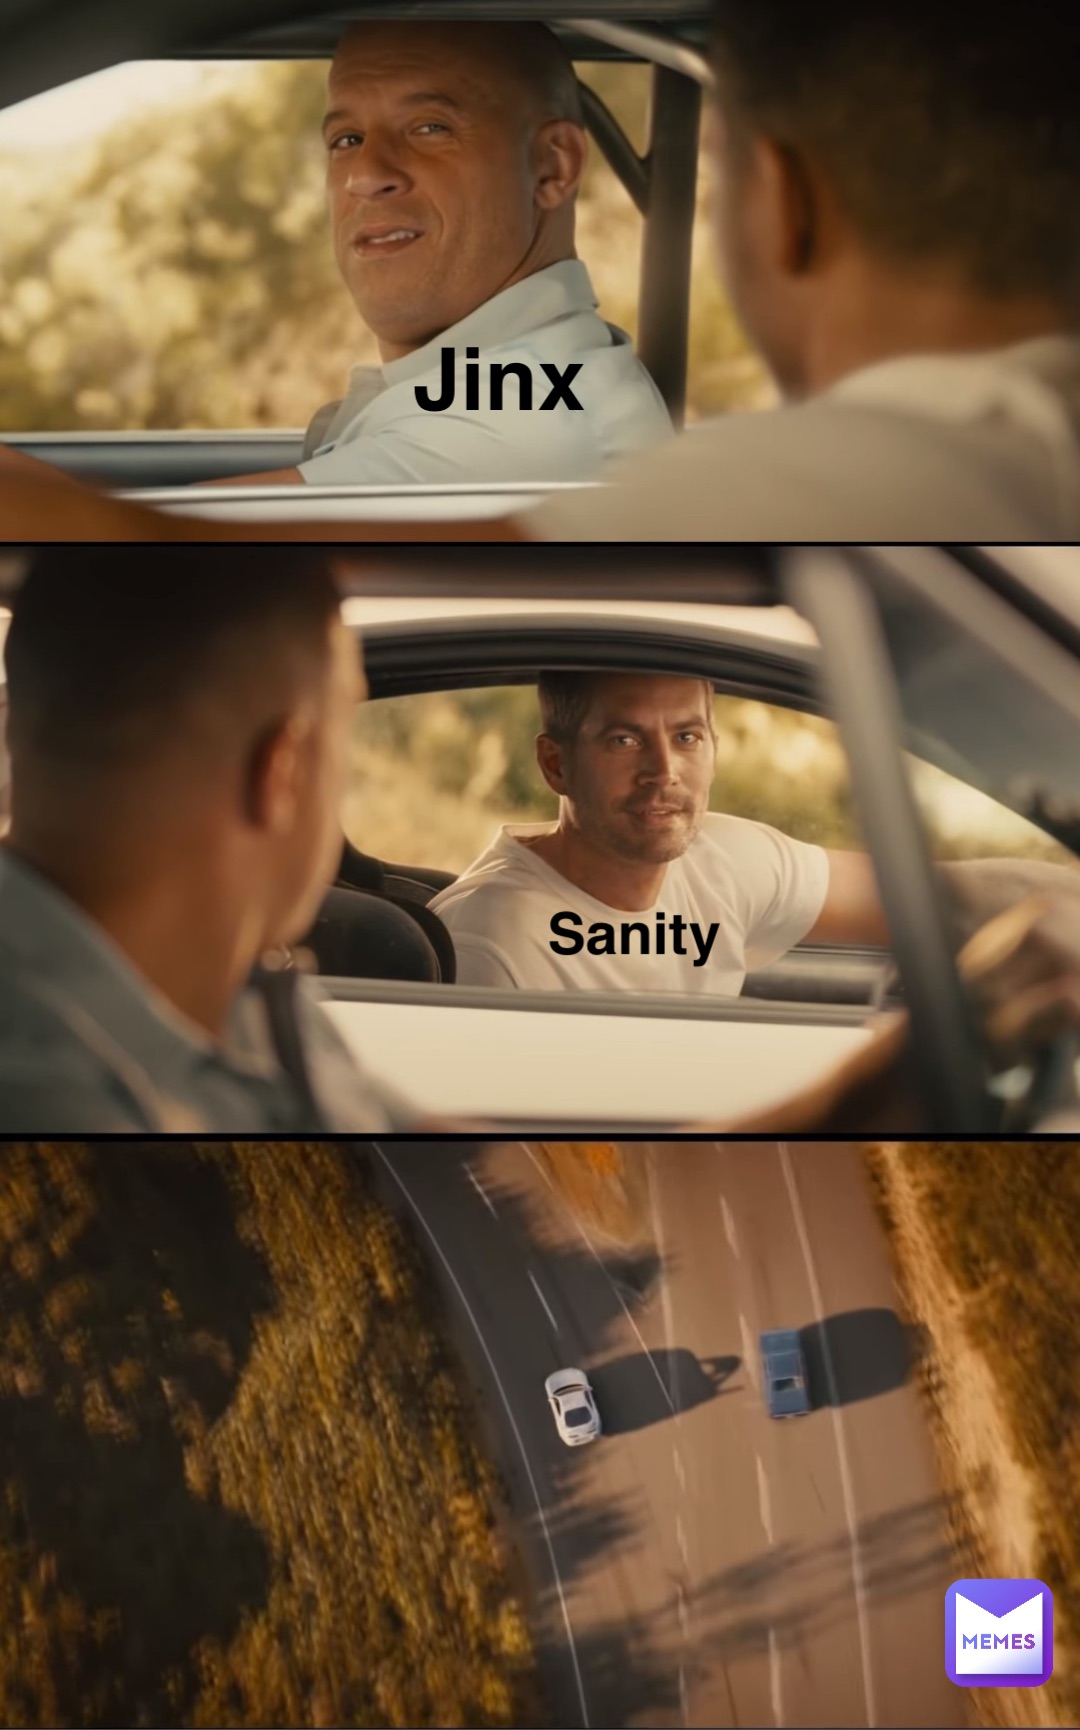 Jinx Sanity